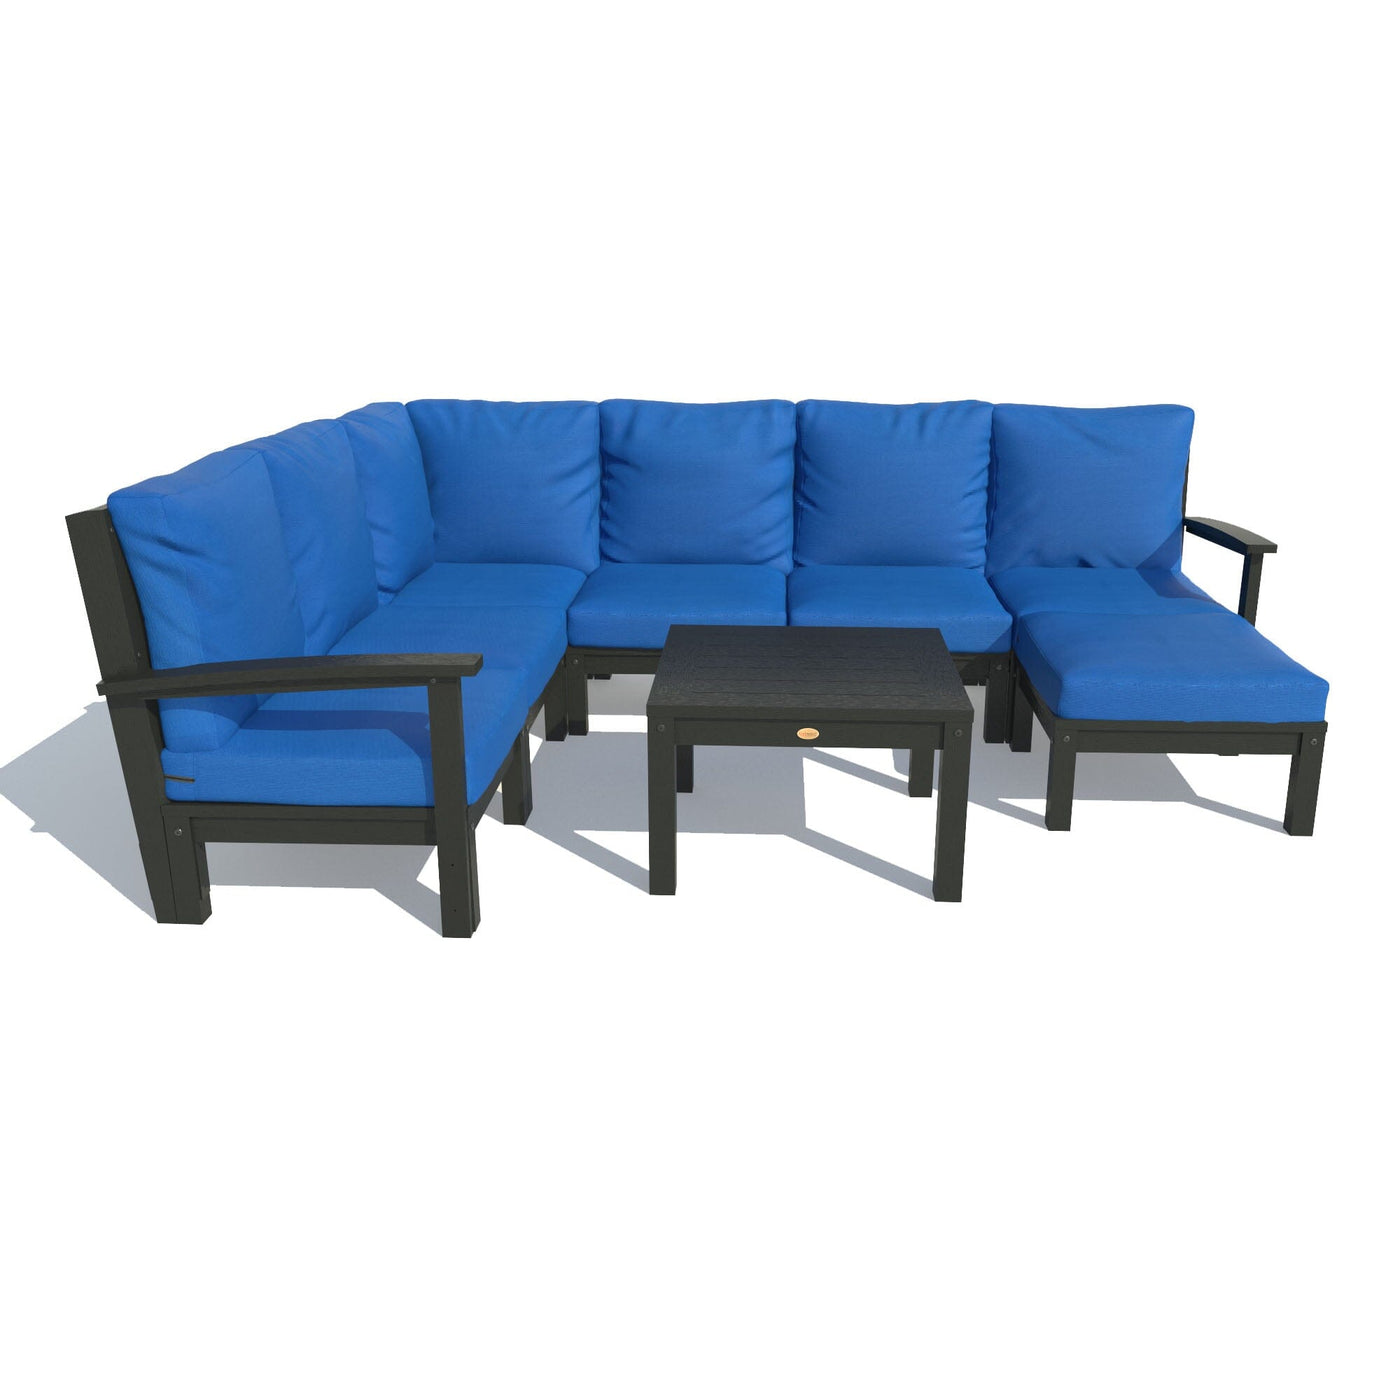 Bespoke Deep Seating: 8 Piece Sectional Sofa Set with Ottoman and Side Table Deep Seating Highwood USA Cobalt Blue Black 